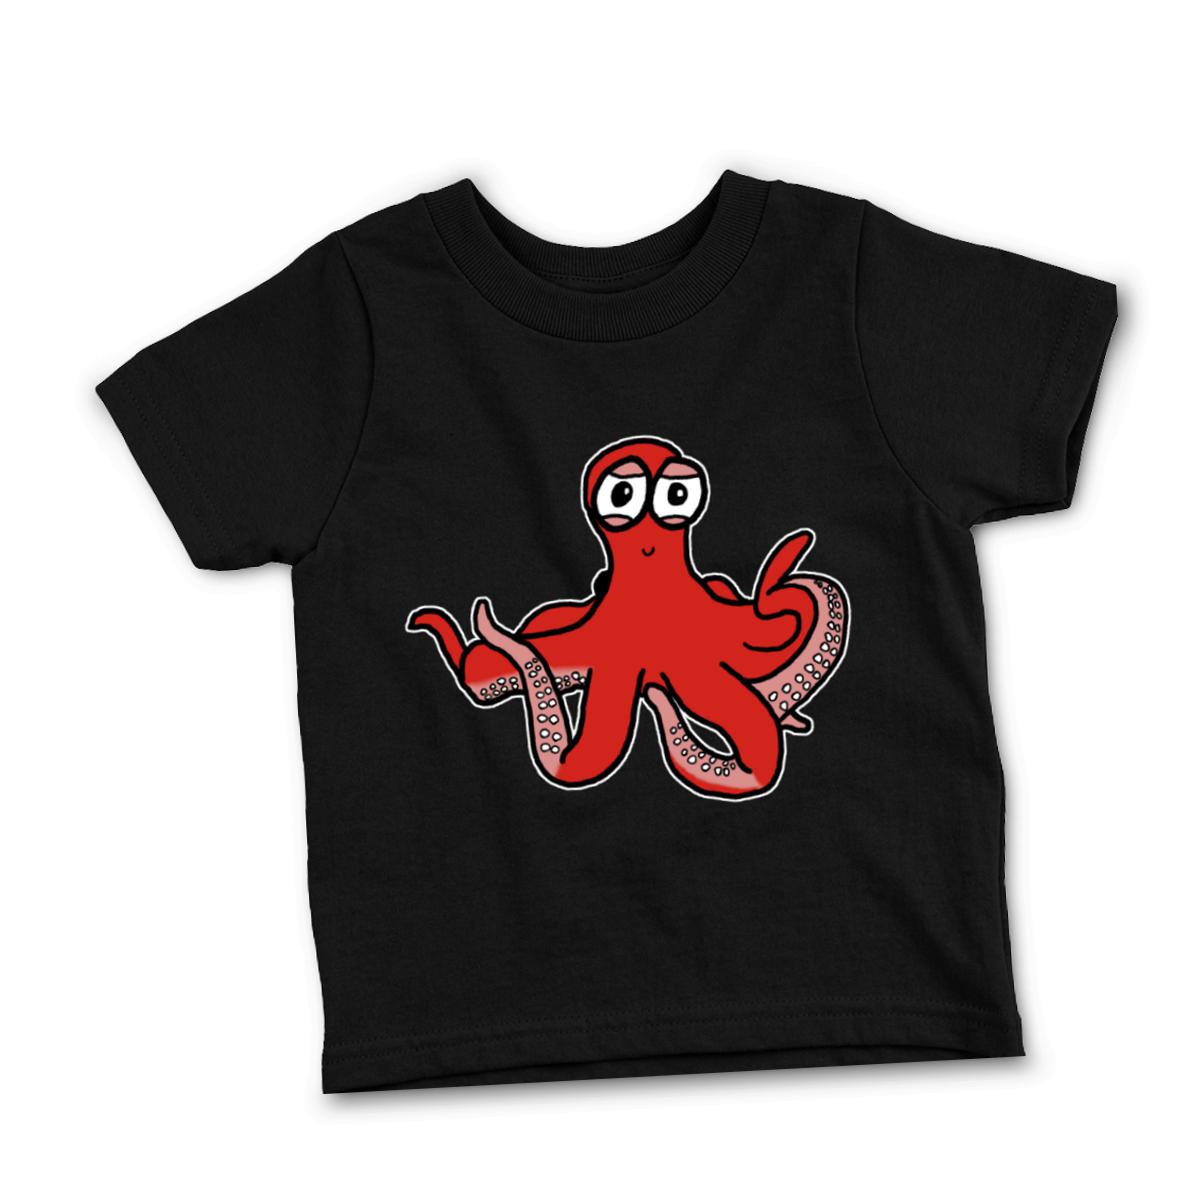 Octopus Infant Tee 24M black